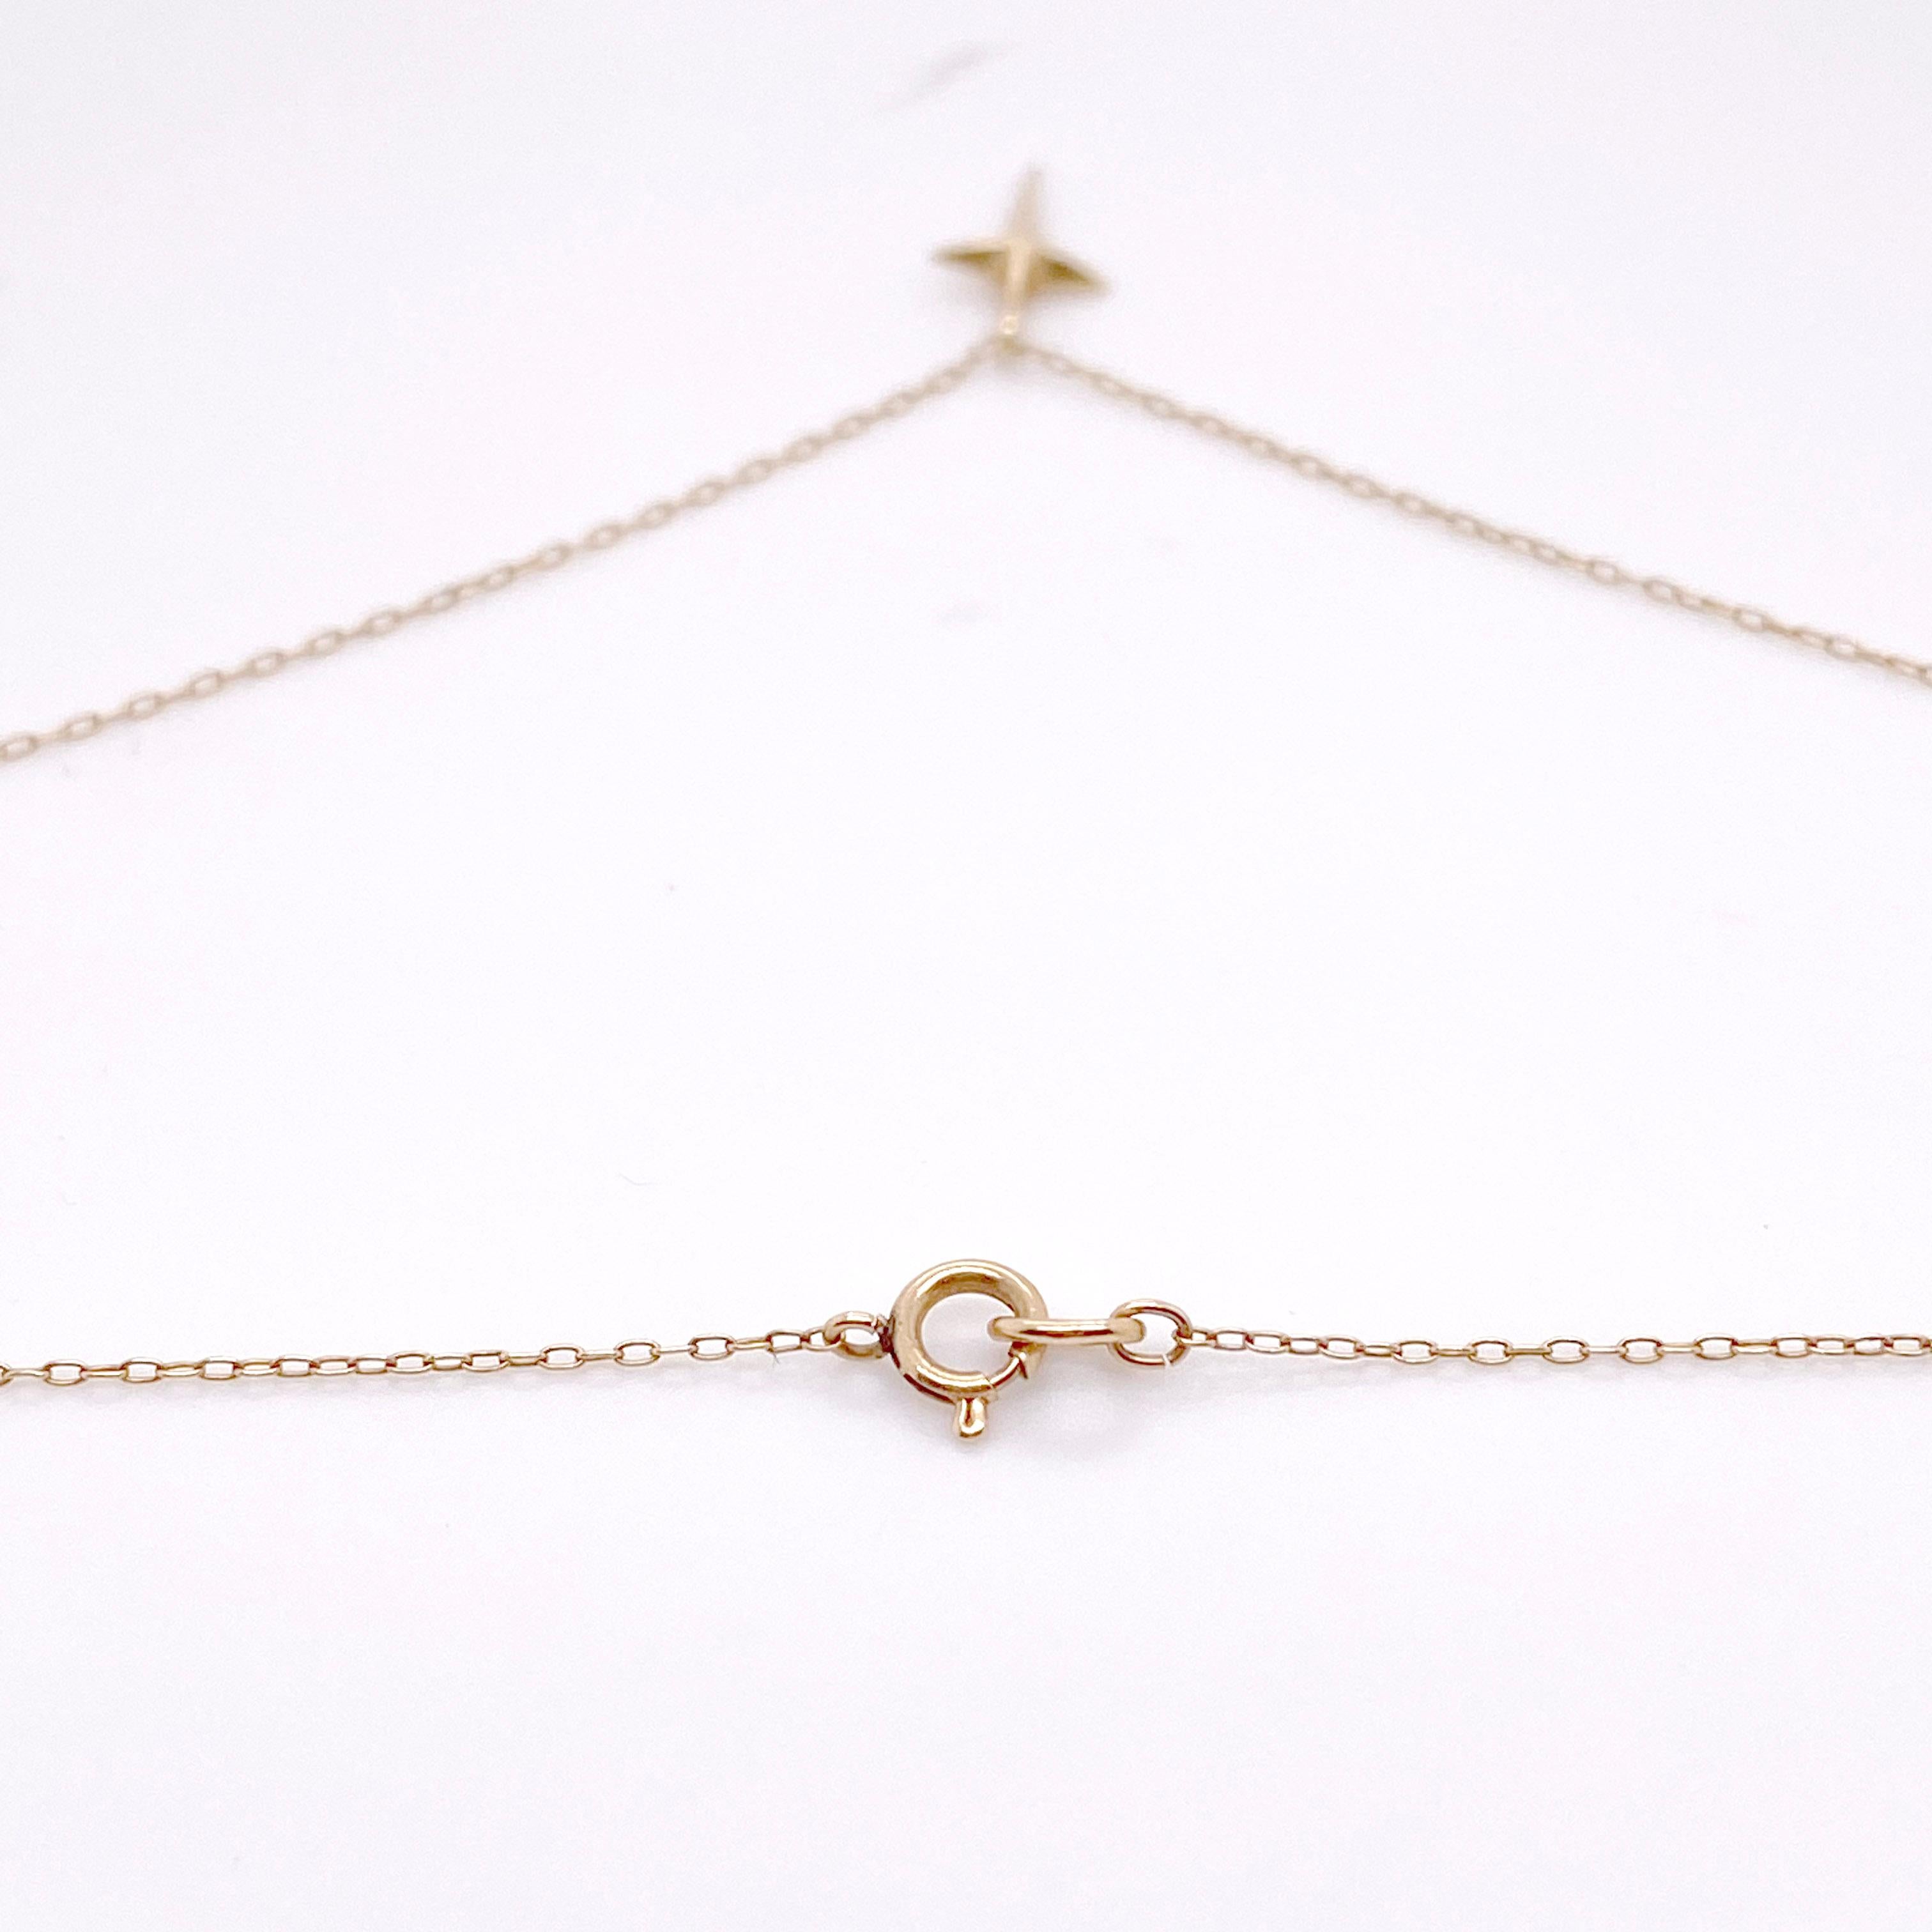 Women's Petite Cross Pendant Necklace, Yellow Gold, Drop Pendant